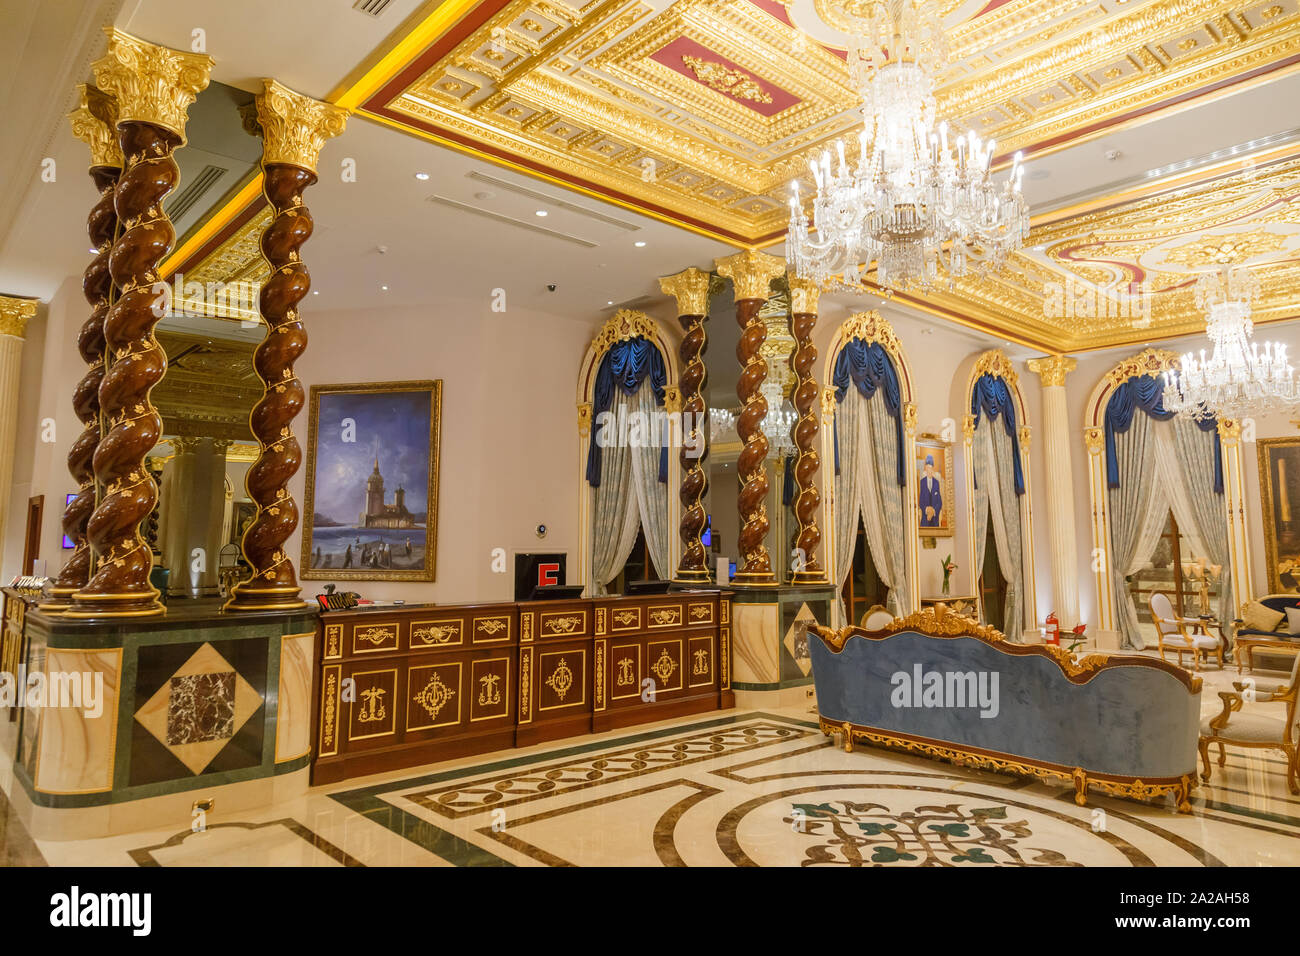 ANTALYA, TURKEY - SEPTEMBER 12, 2019: Reception desk in lobby of Titanic Mardan Palace luxury hotel, the most expensive European's resort. Stock Photo